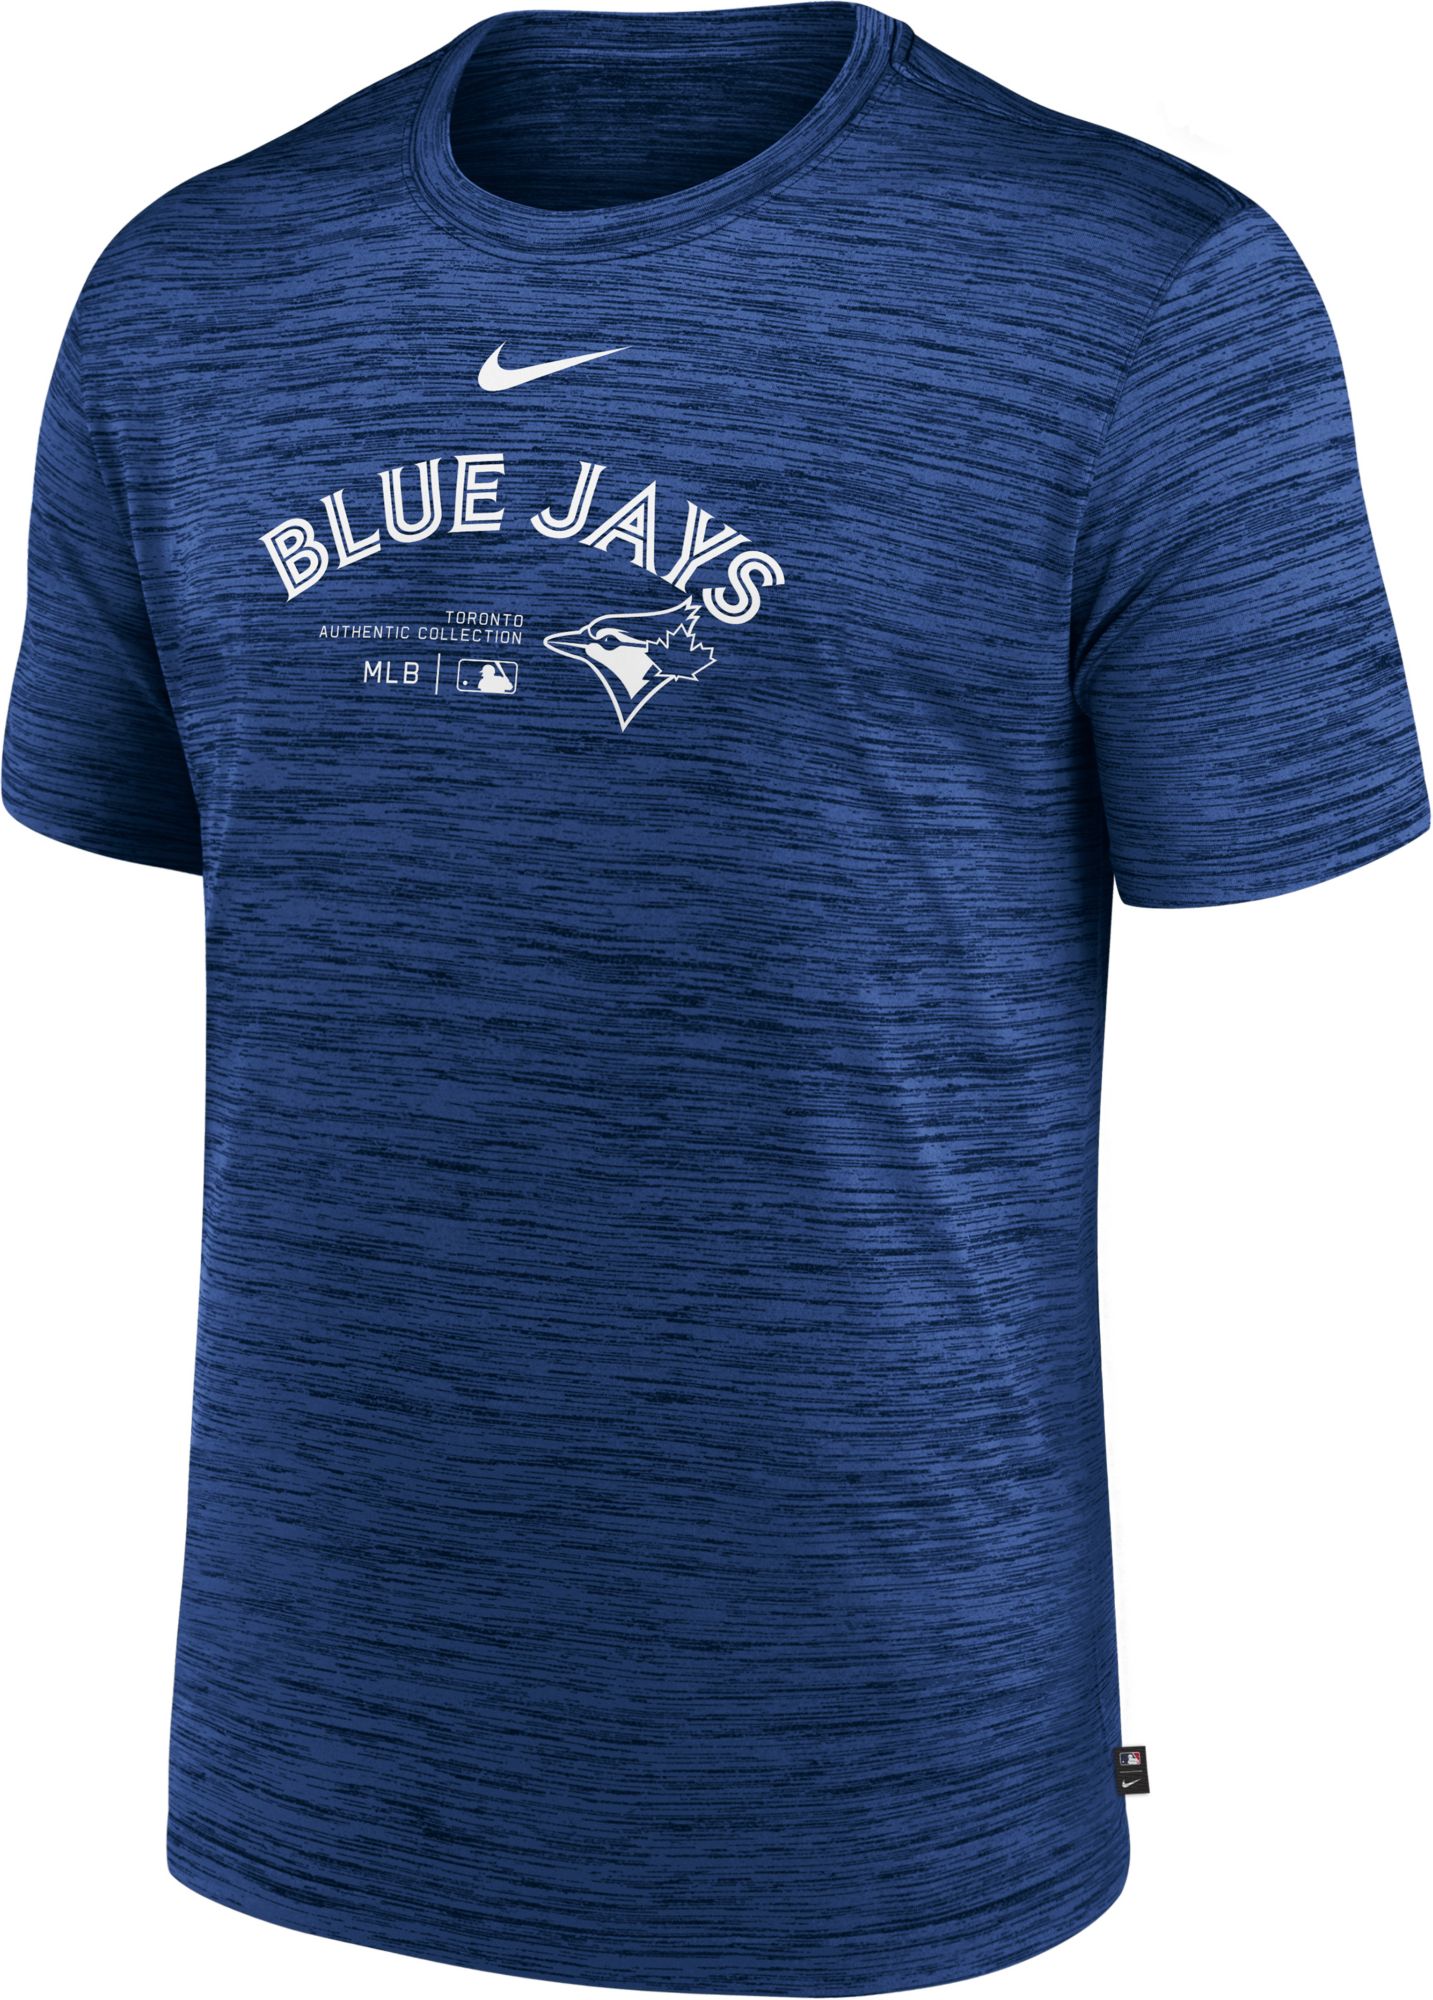 Nike Men's Toronto Blue Jays Authentic Collection Velocity T-Shirt